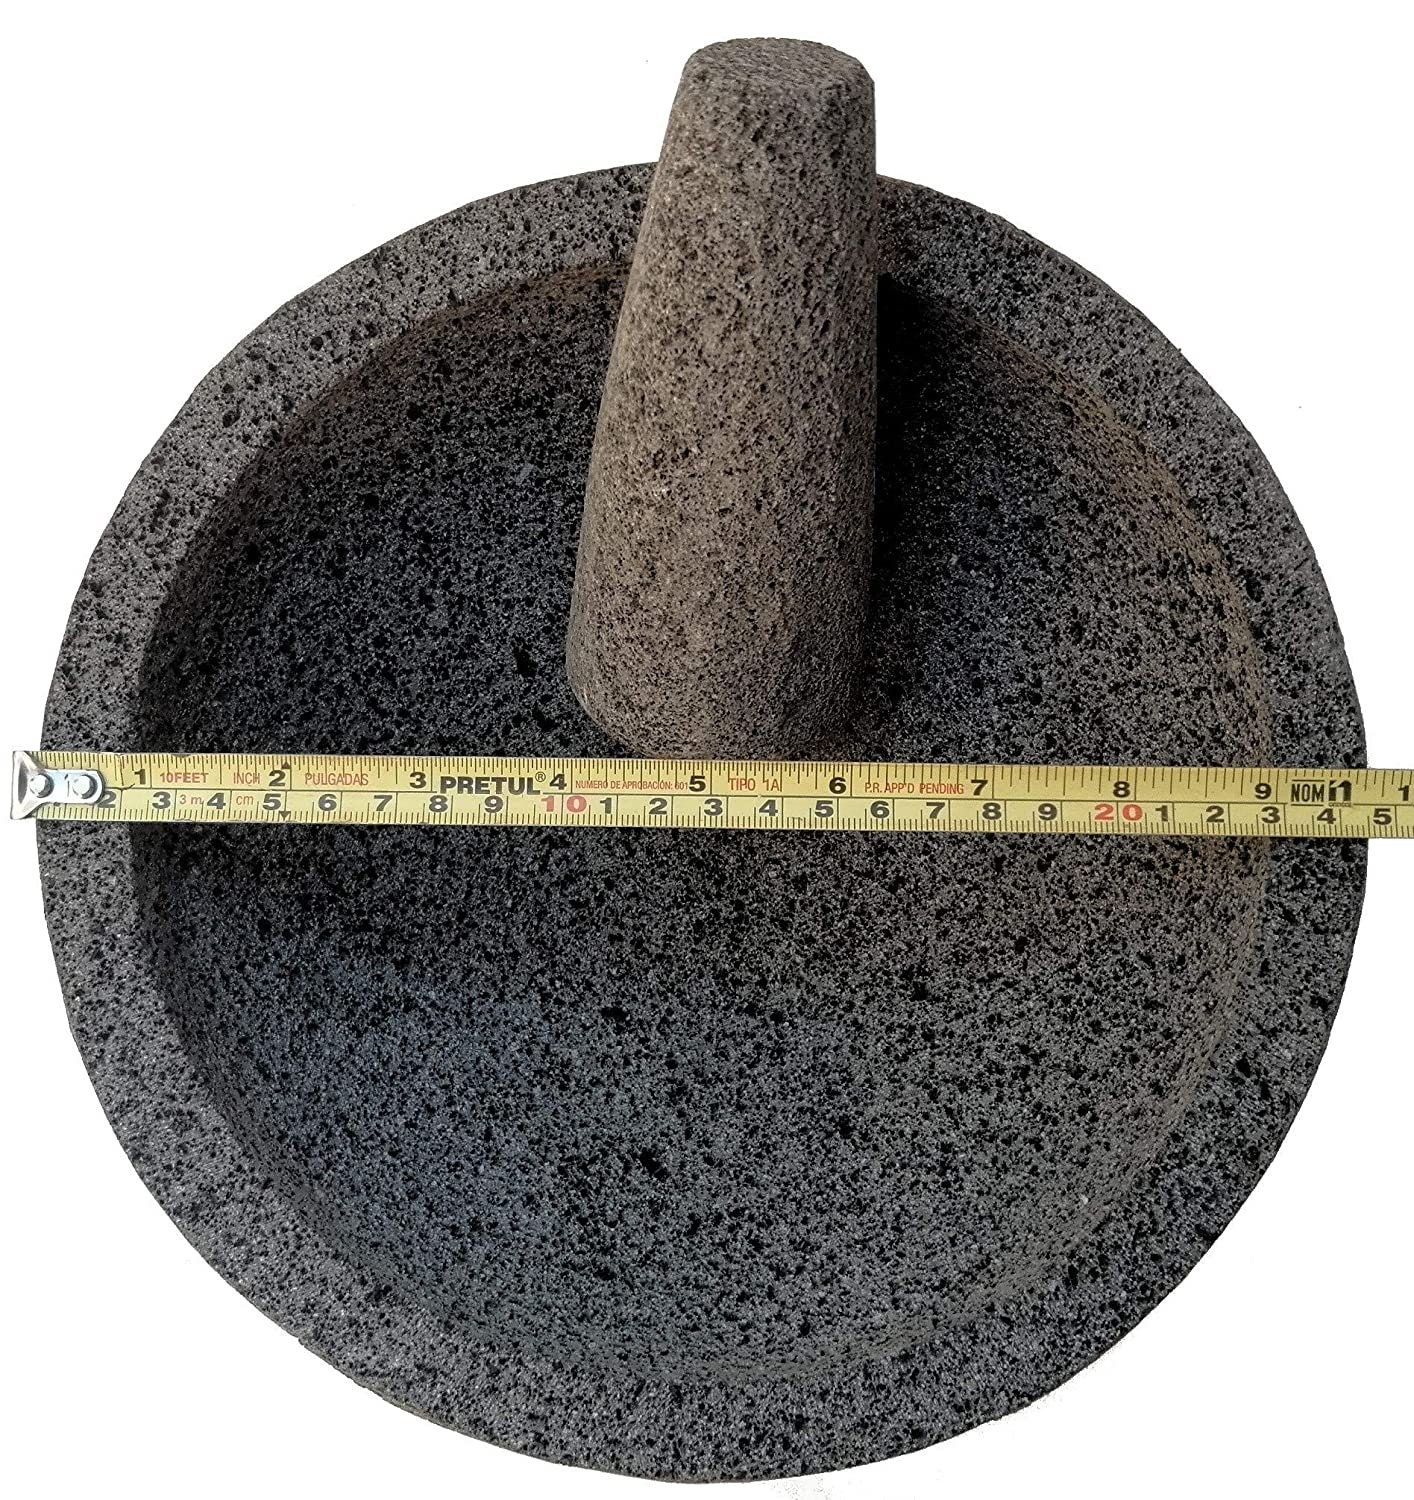 16 Inch Molcajete Handmade Volcanic Stone Mexican Mortar. Large Grinder 40  Cm in Diameter. 